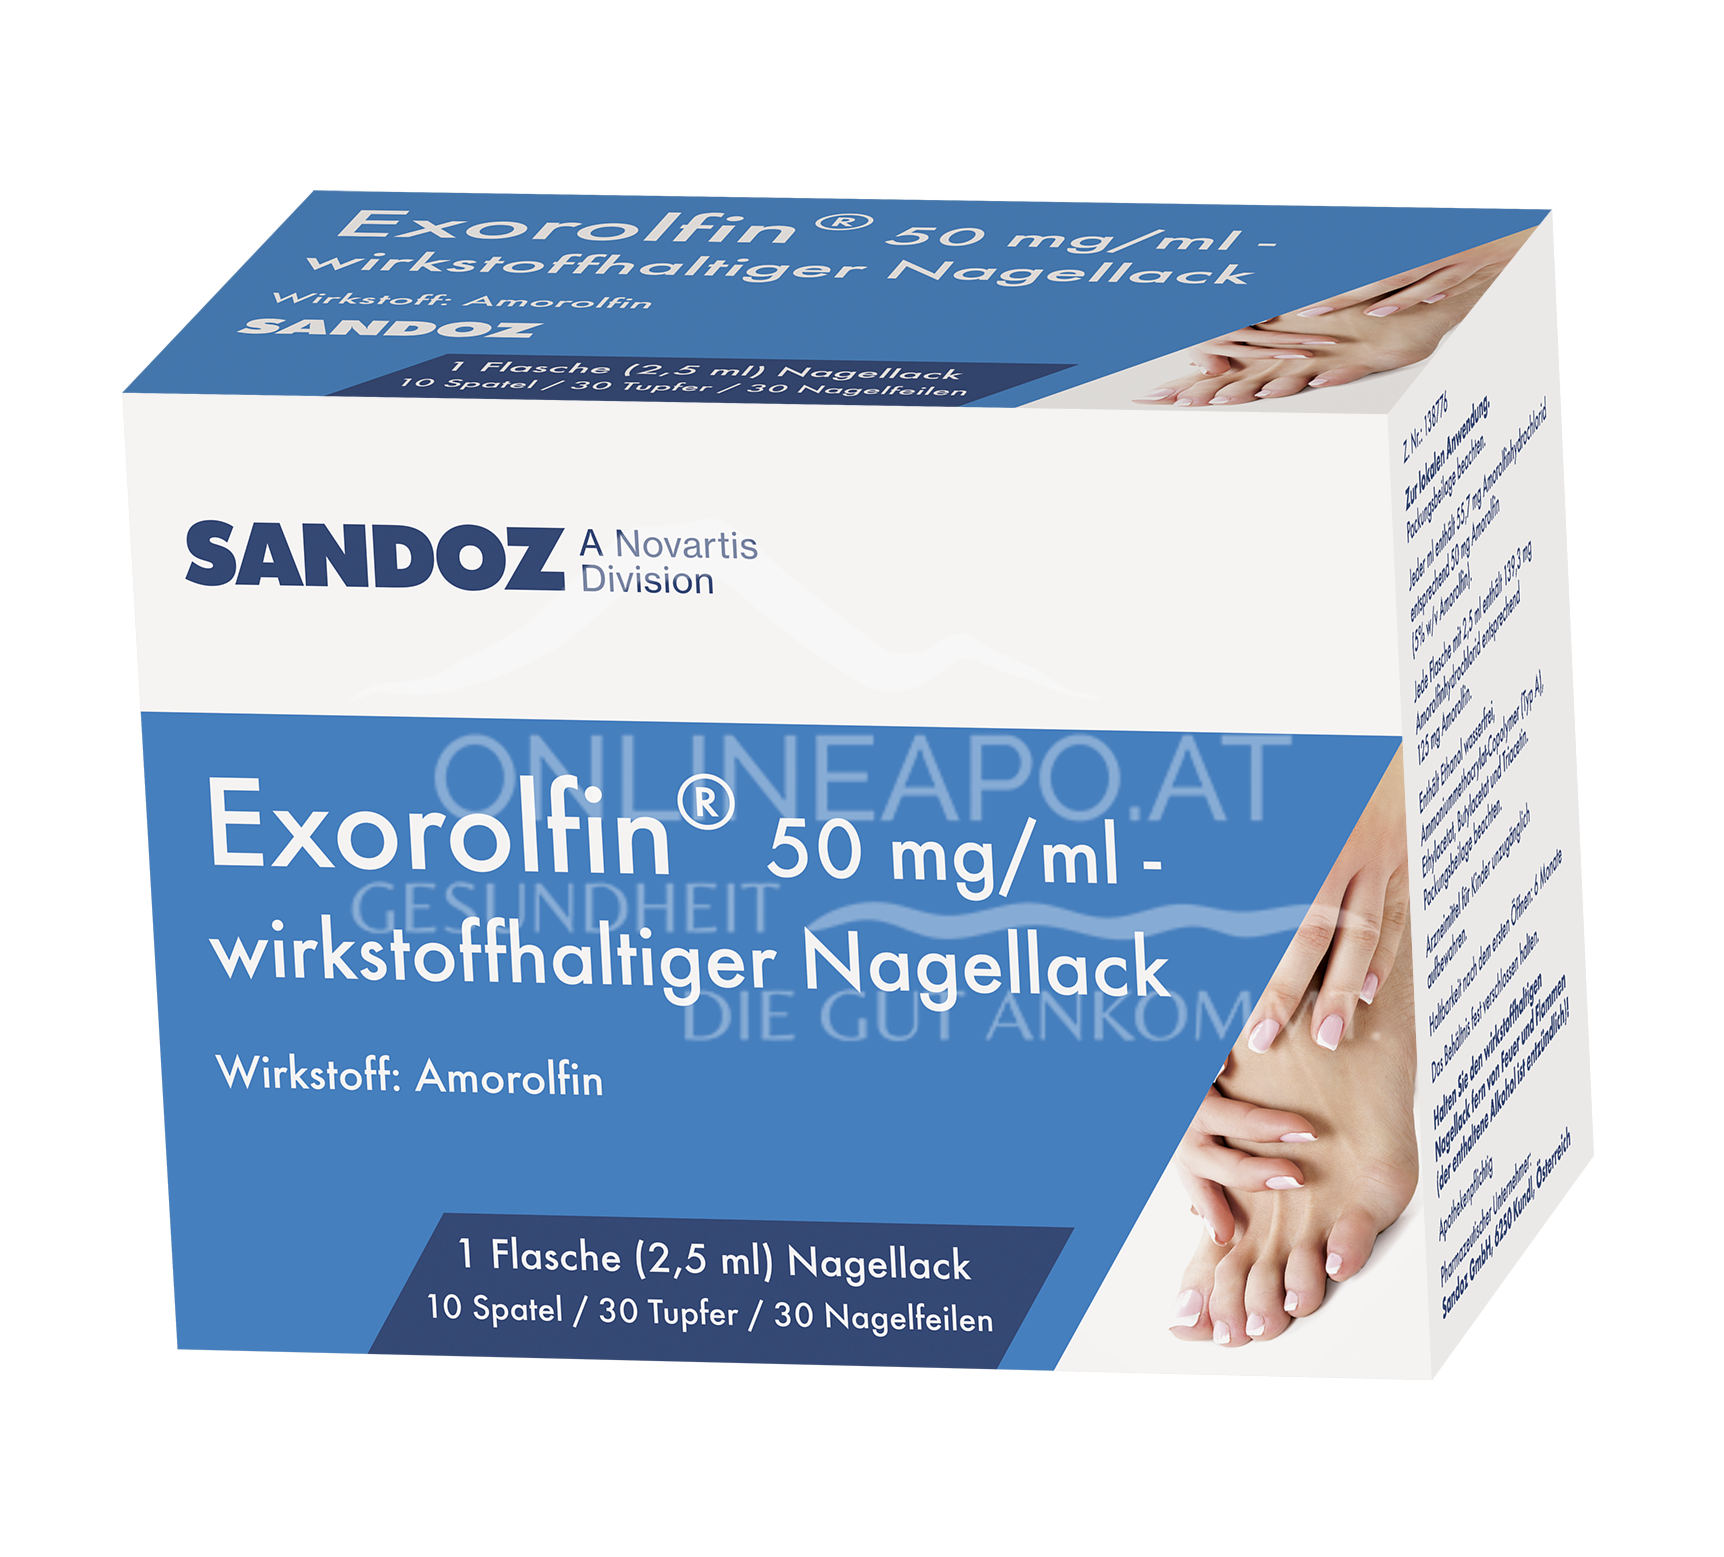 Exorolfin® 50 mg/ml wirkstoffhaltiger Nagellack